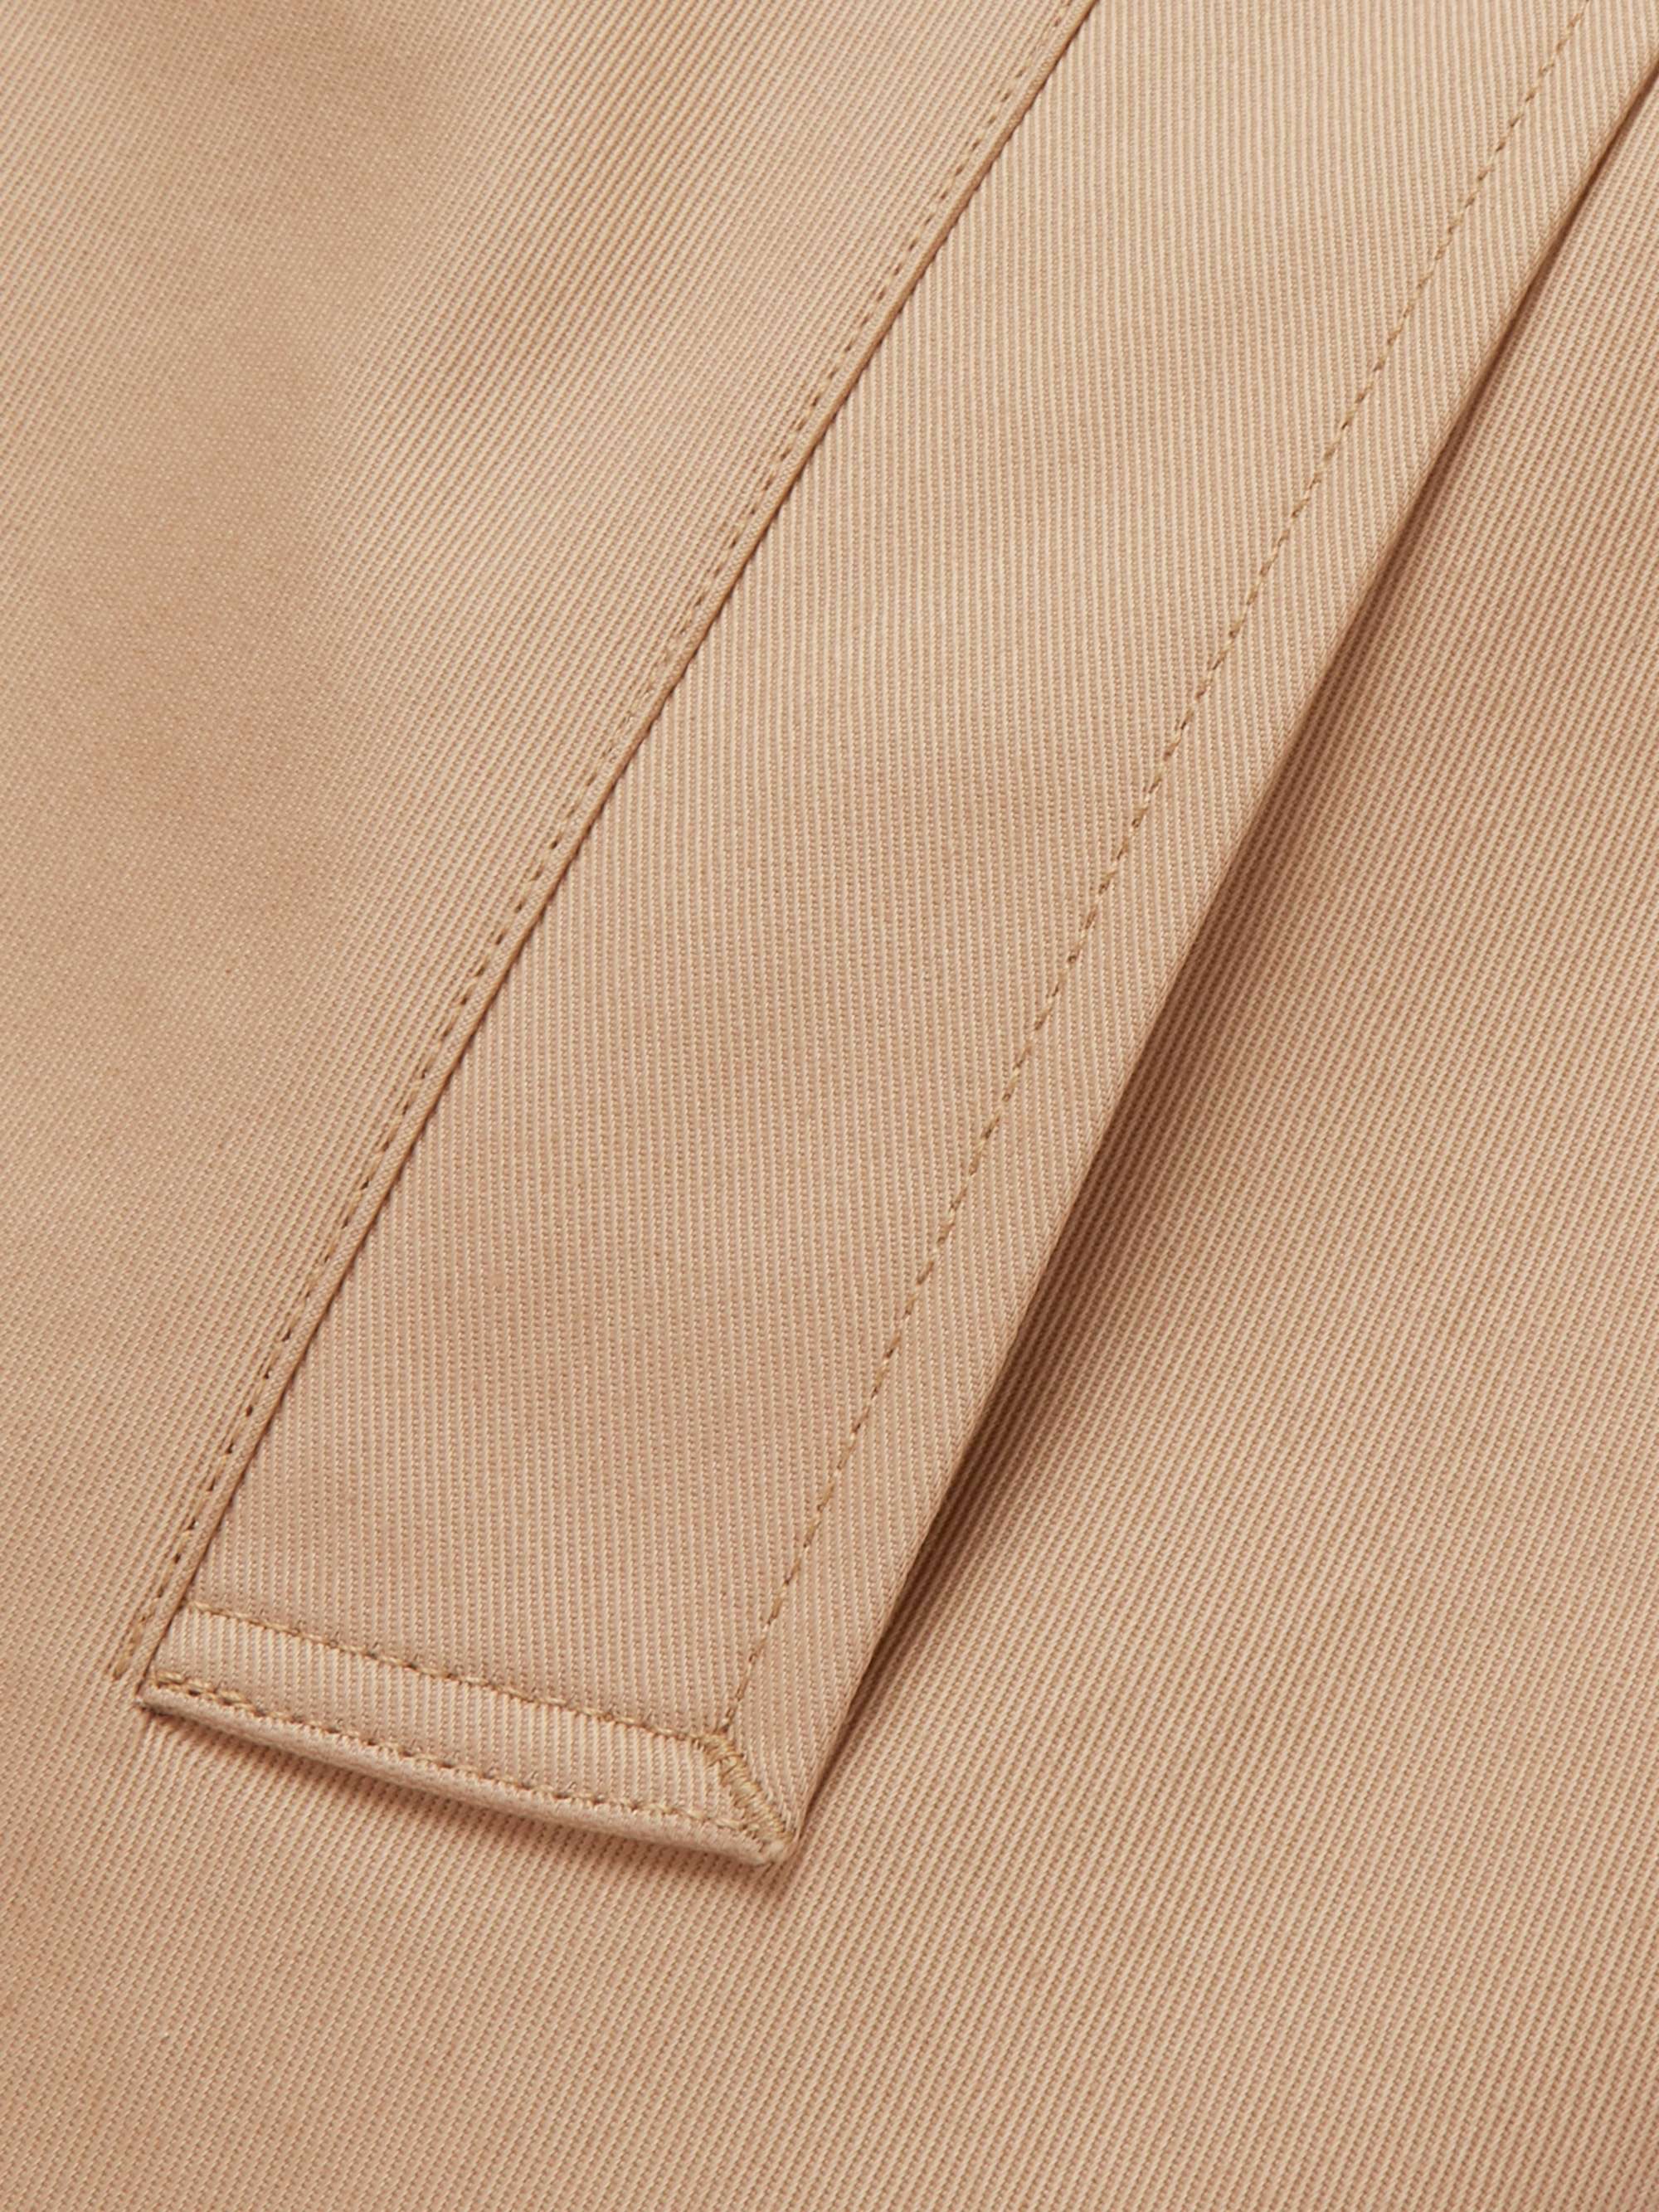 A.P.C. Cotton-Gabardine Trench Coat